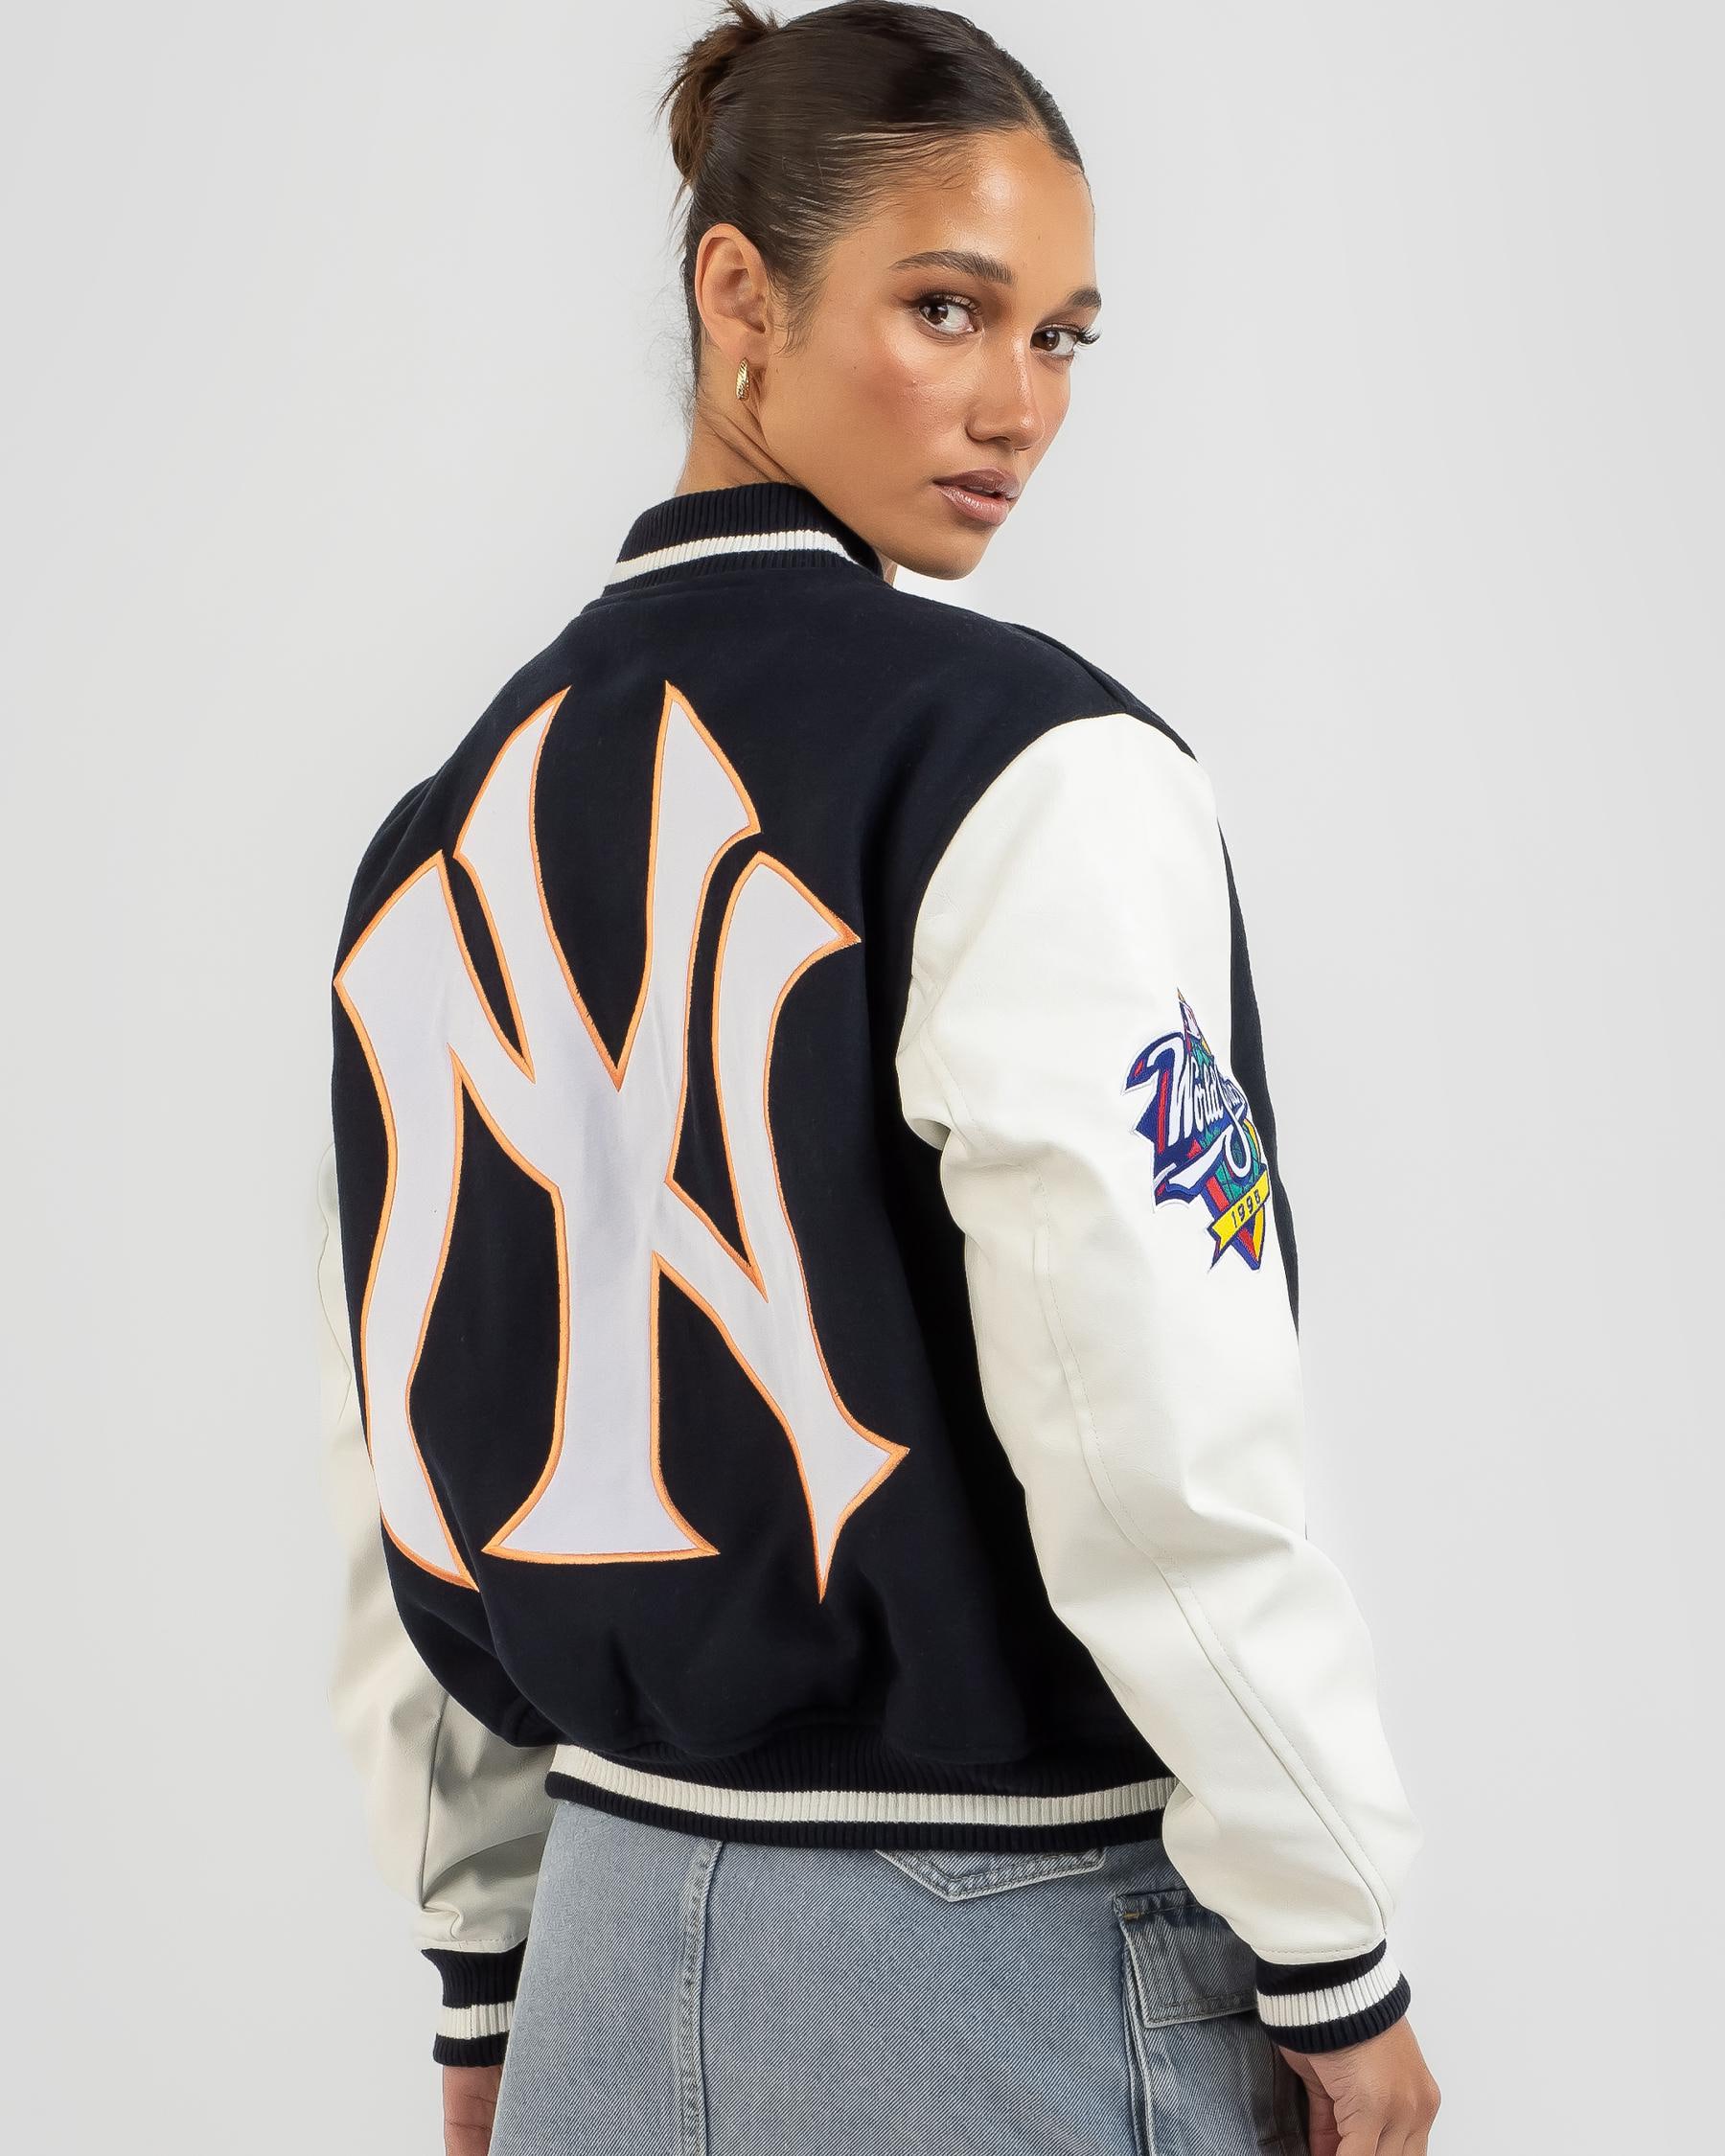 New York Yankees Ladies Clothing, Yankees Majestic Women's Apparel